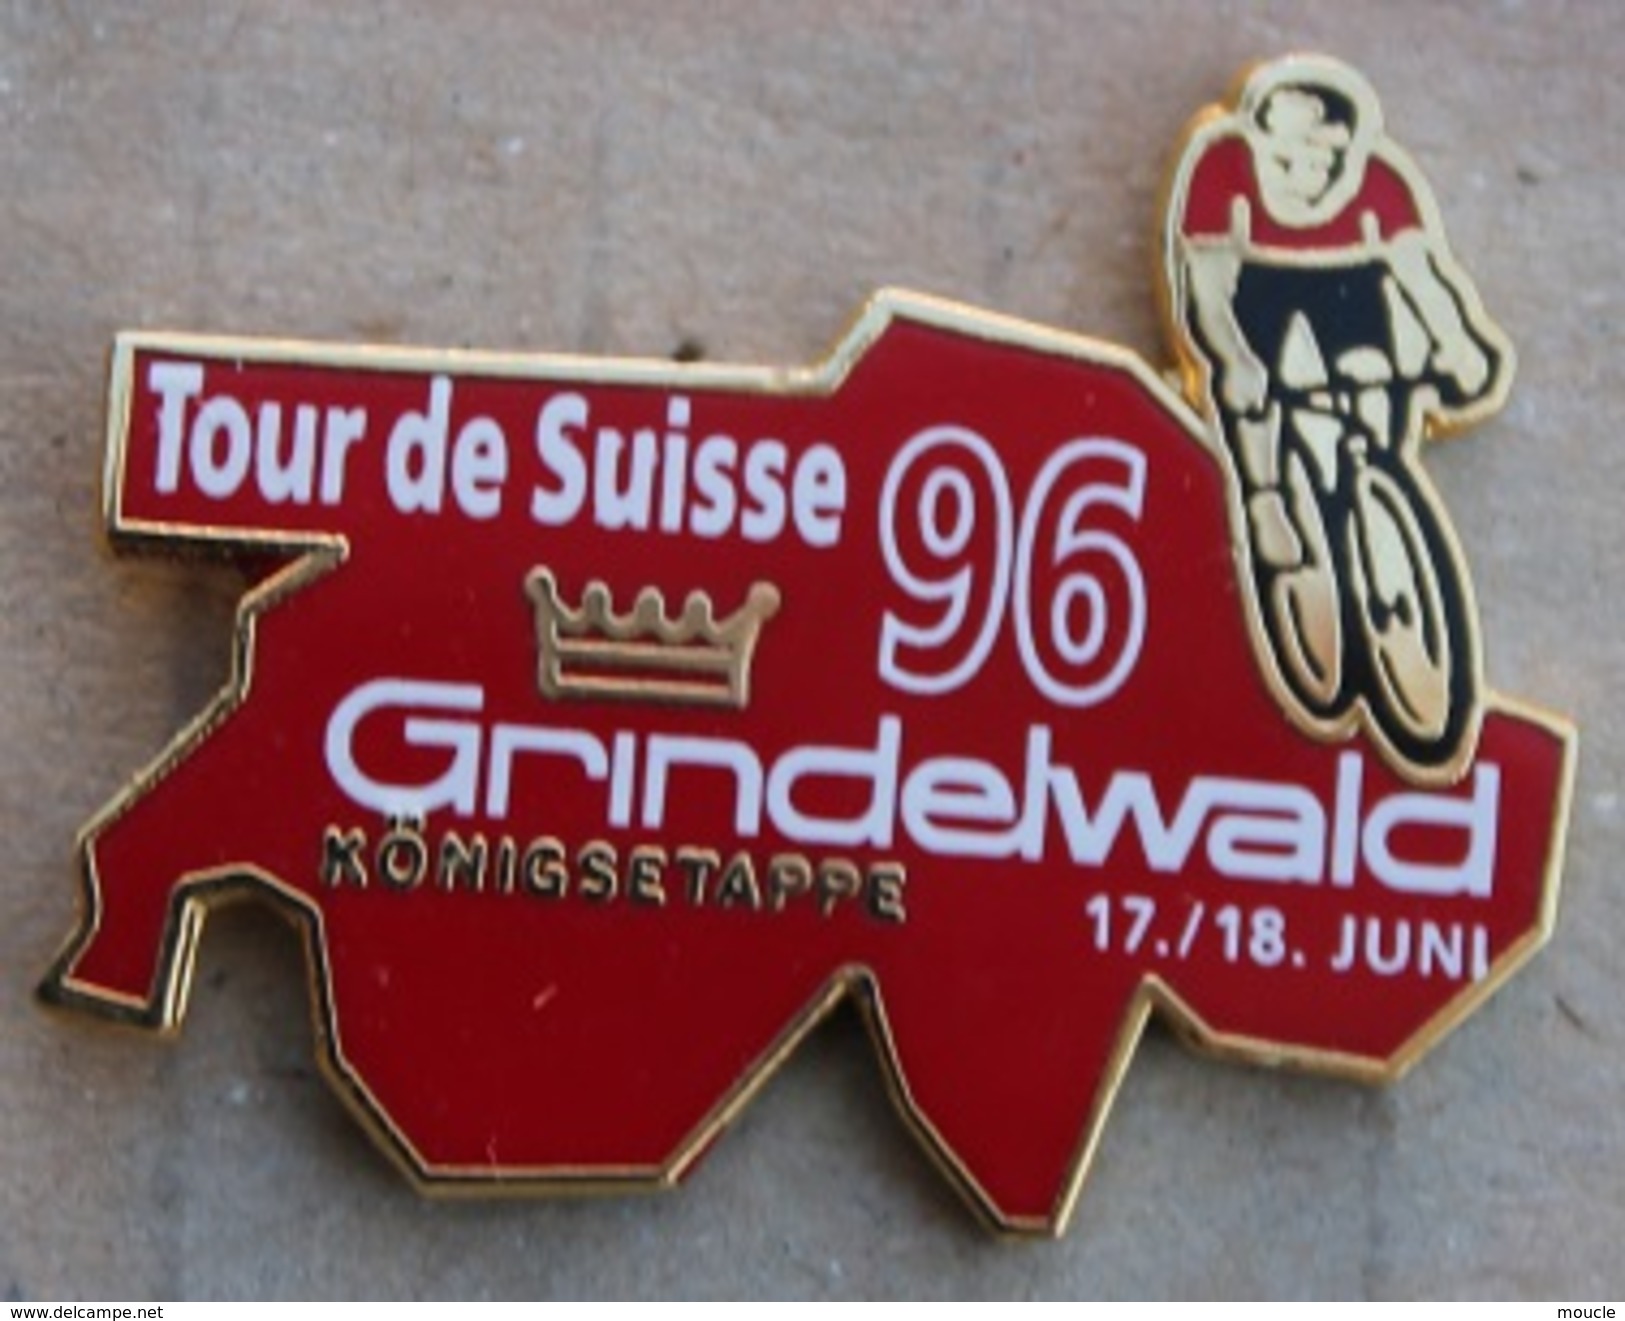 CYCLISME - VELO - CYCLISTE - TOUR DE SUISSE 96 - GRINDELWALD 17/18 JUIN - COURONNE - KÖNIGSETAPPE - SCHWEIZ -     (15) - Wielrennen